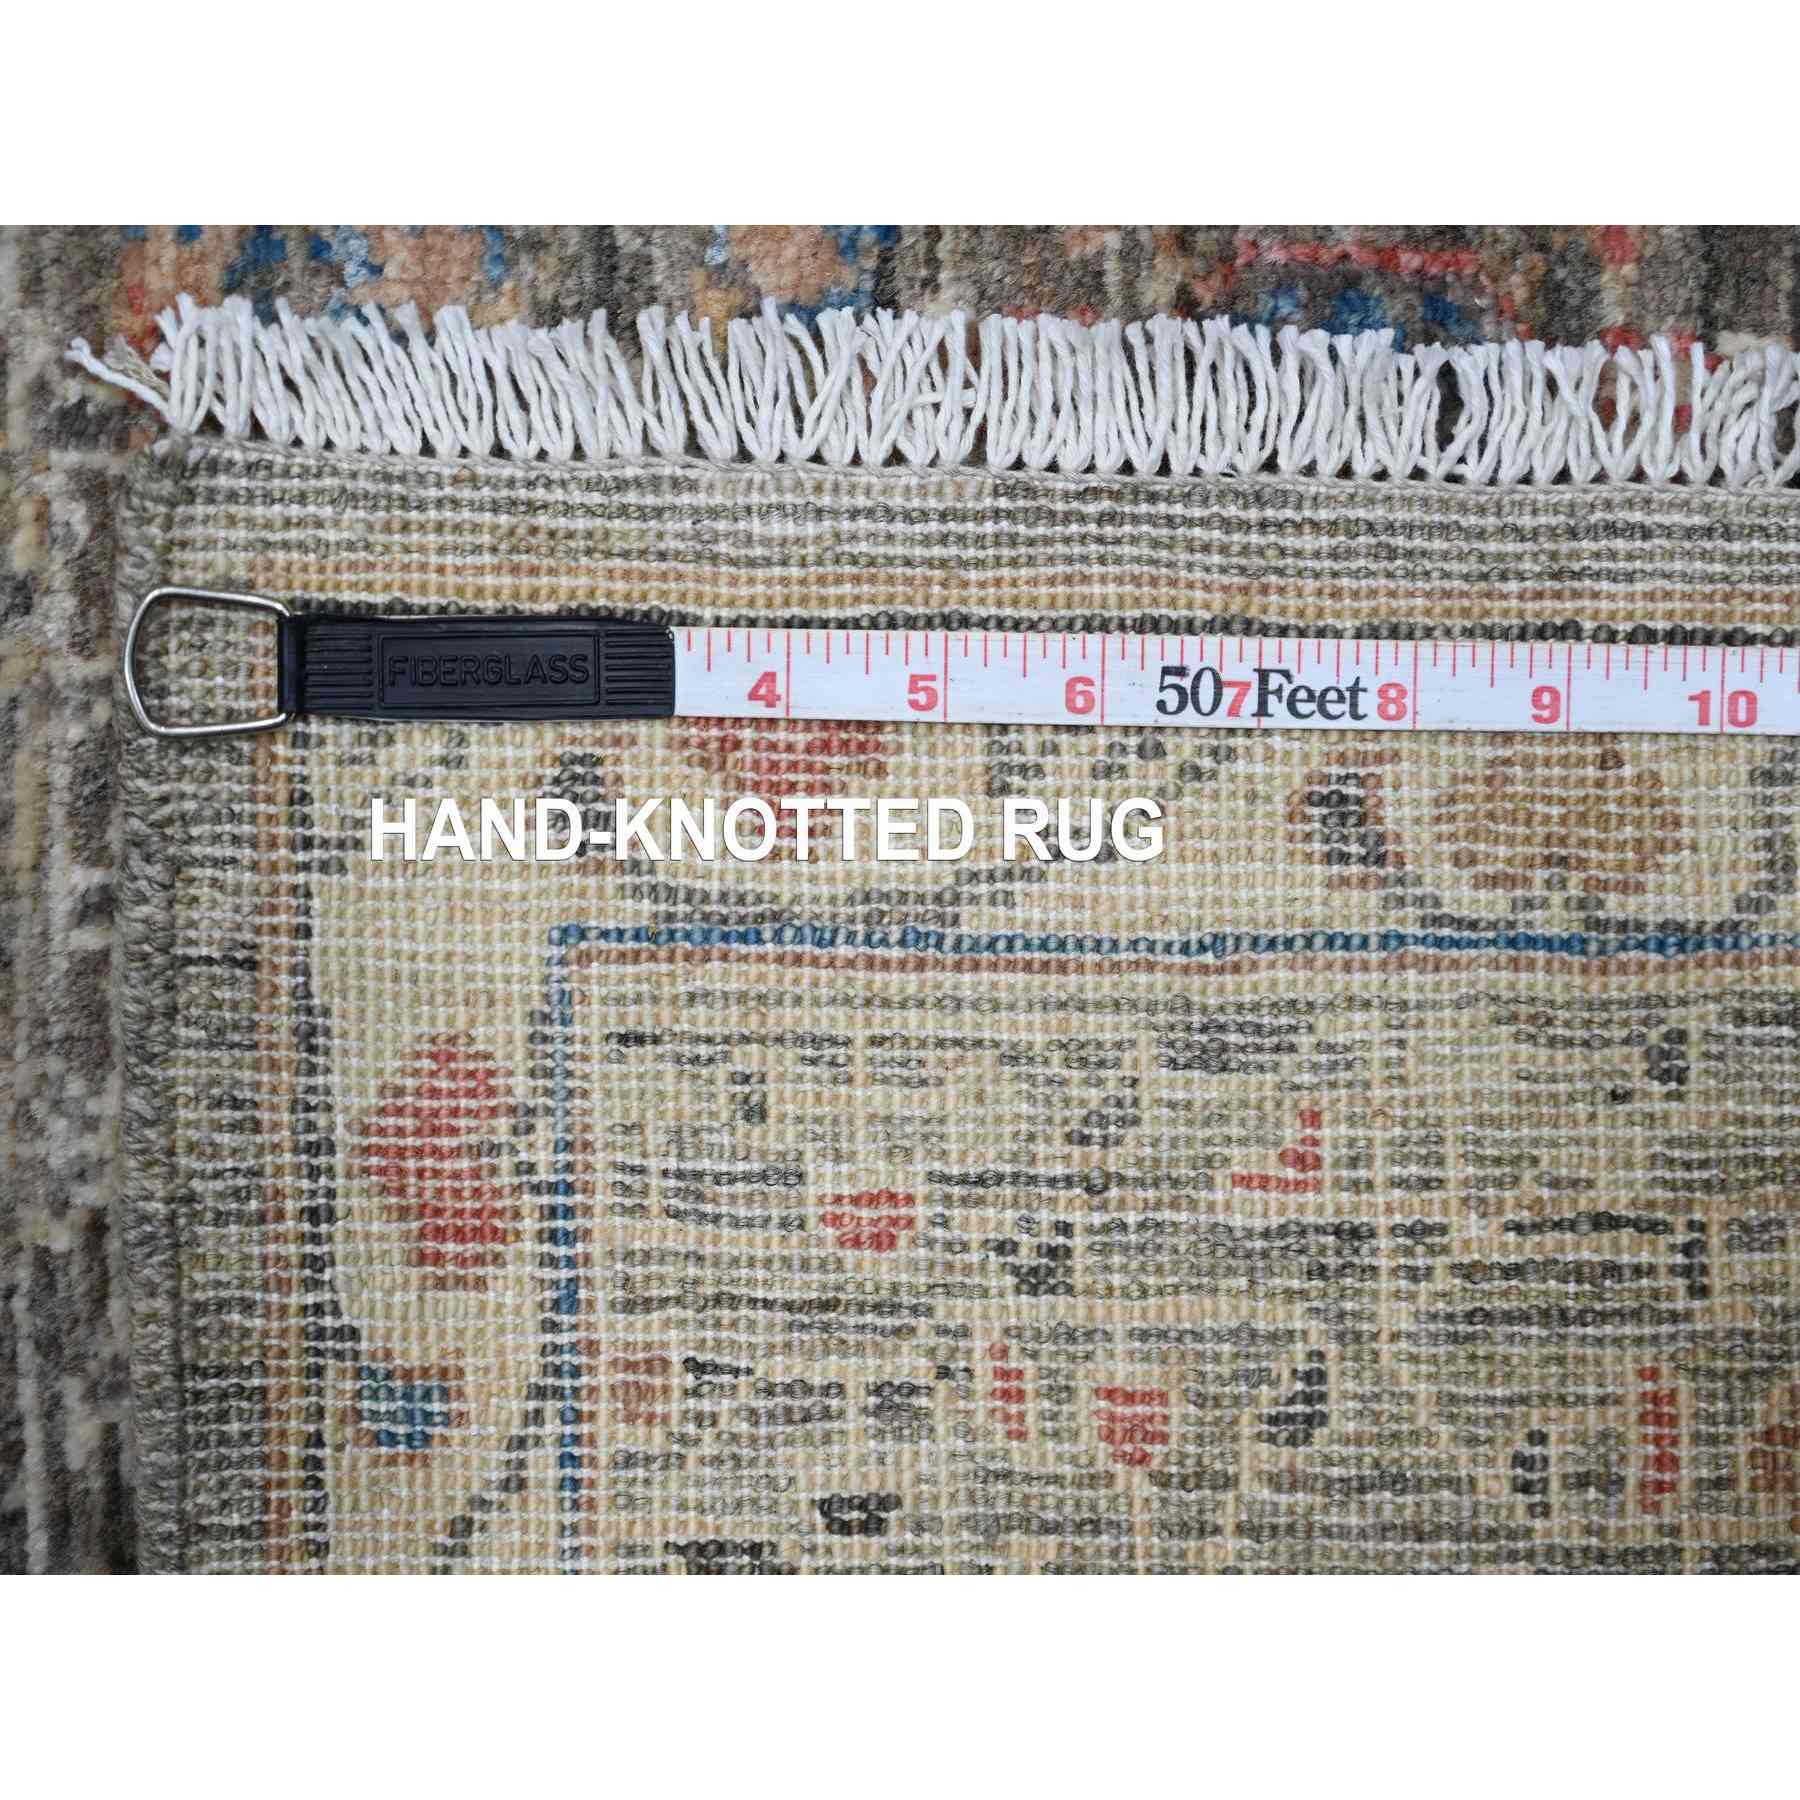 Mamluk-Hand-Knotted-Rug-443670